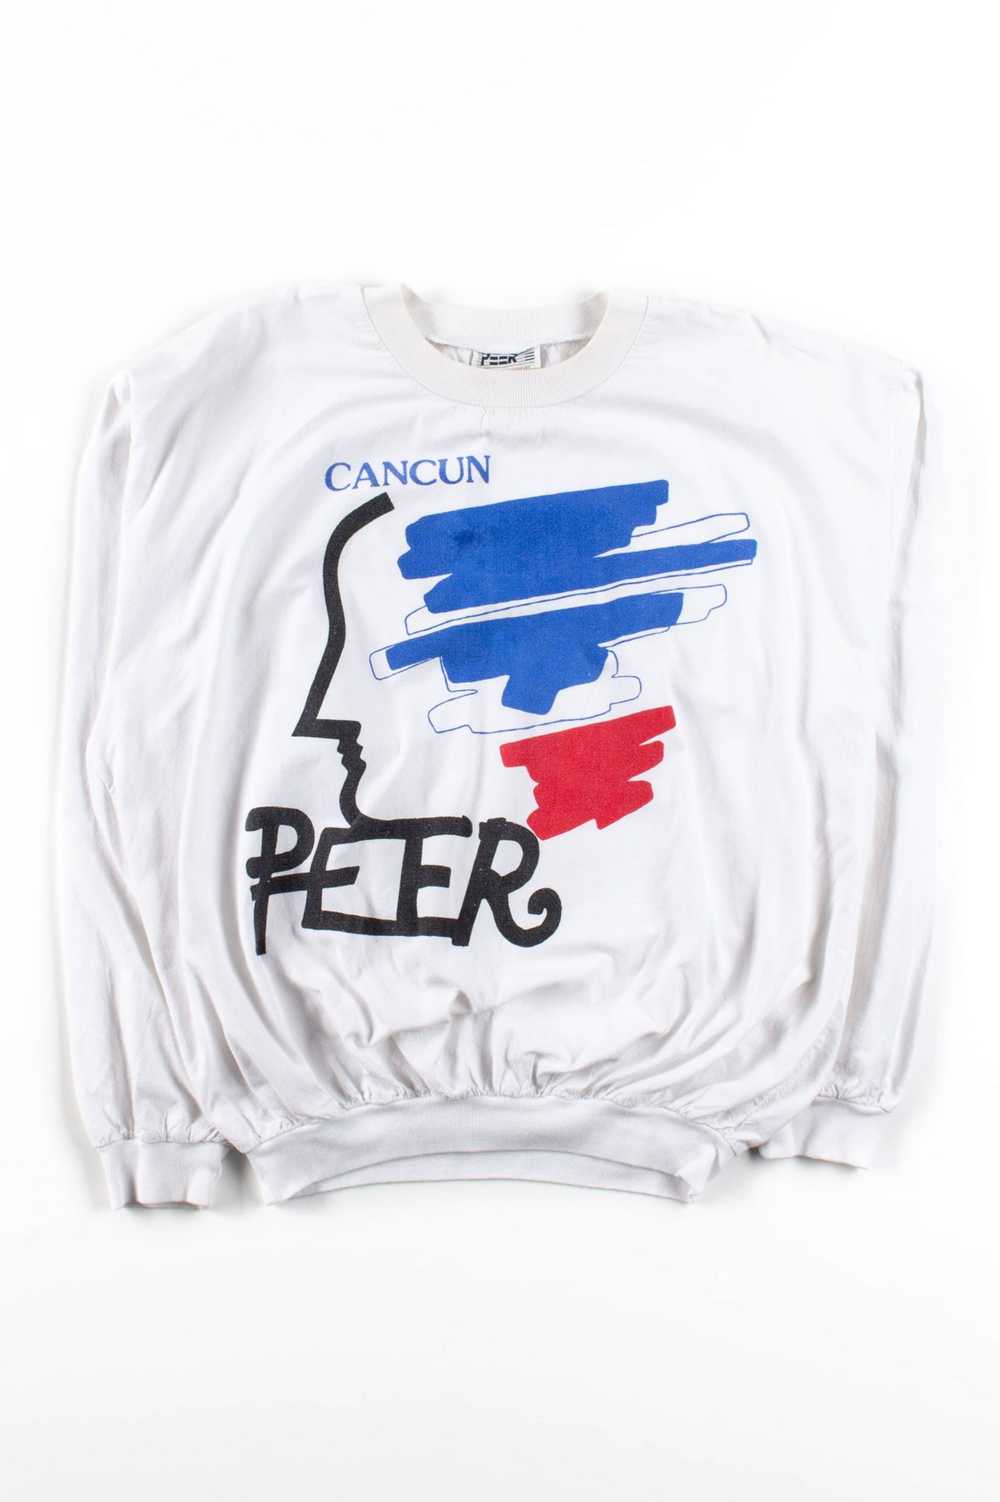 Vintage Peer Cancun Lightweight Sweatshirt - image 2